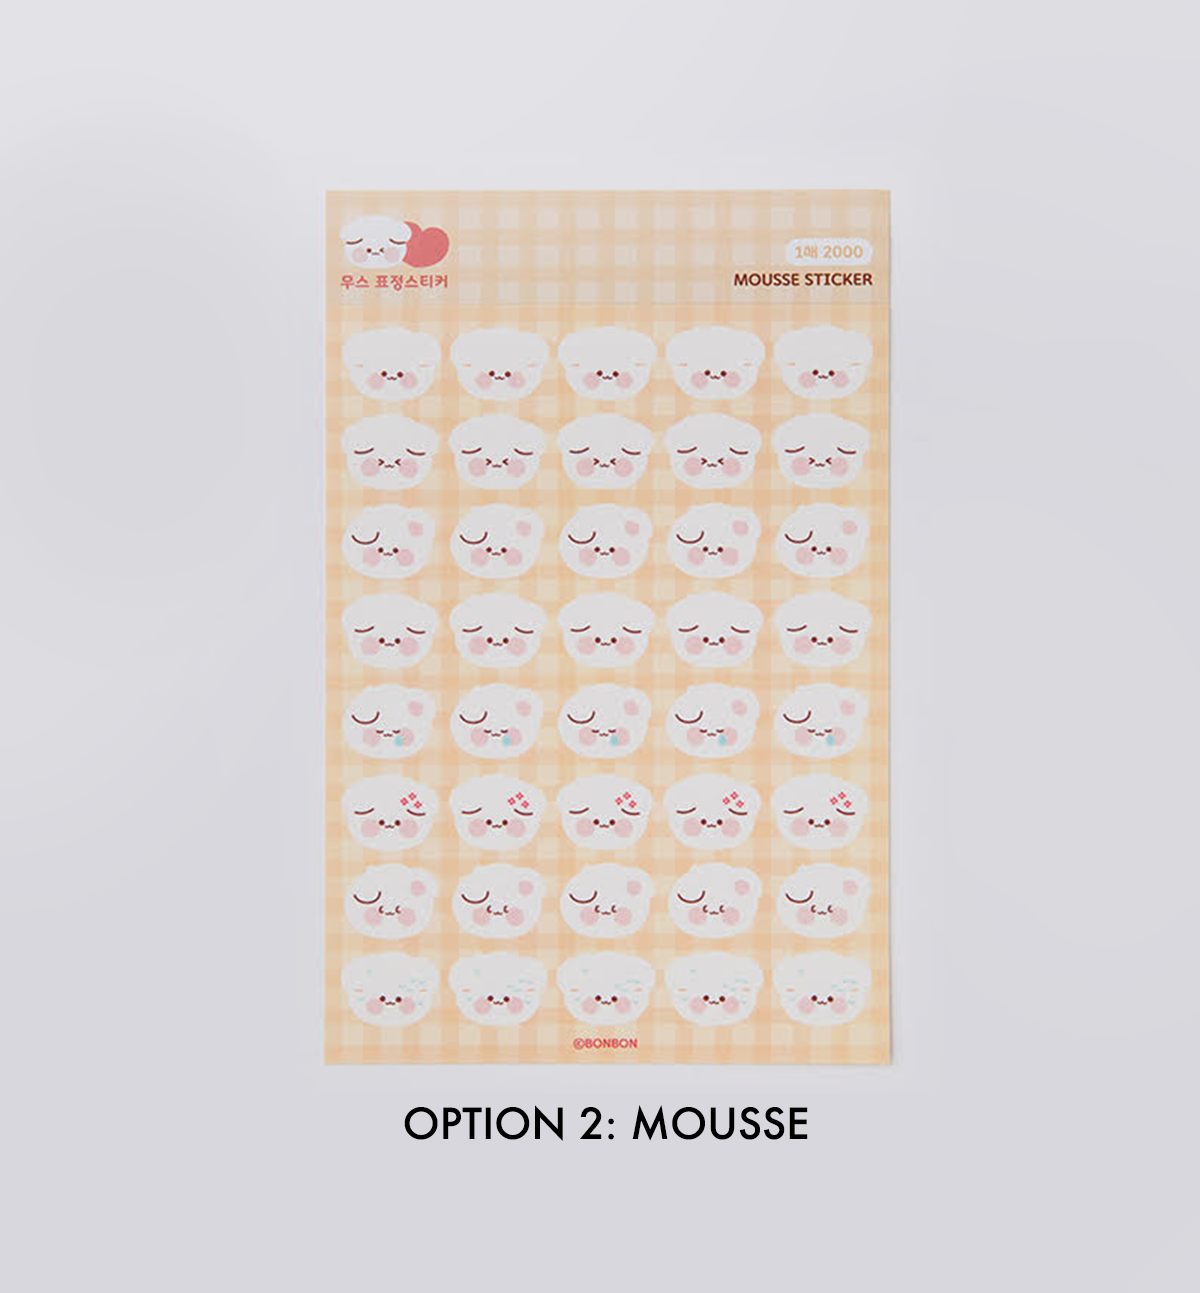 Mousse & Strawberry Sticker